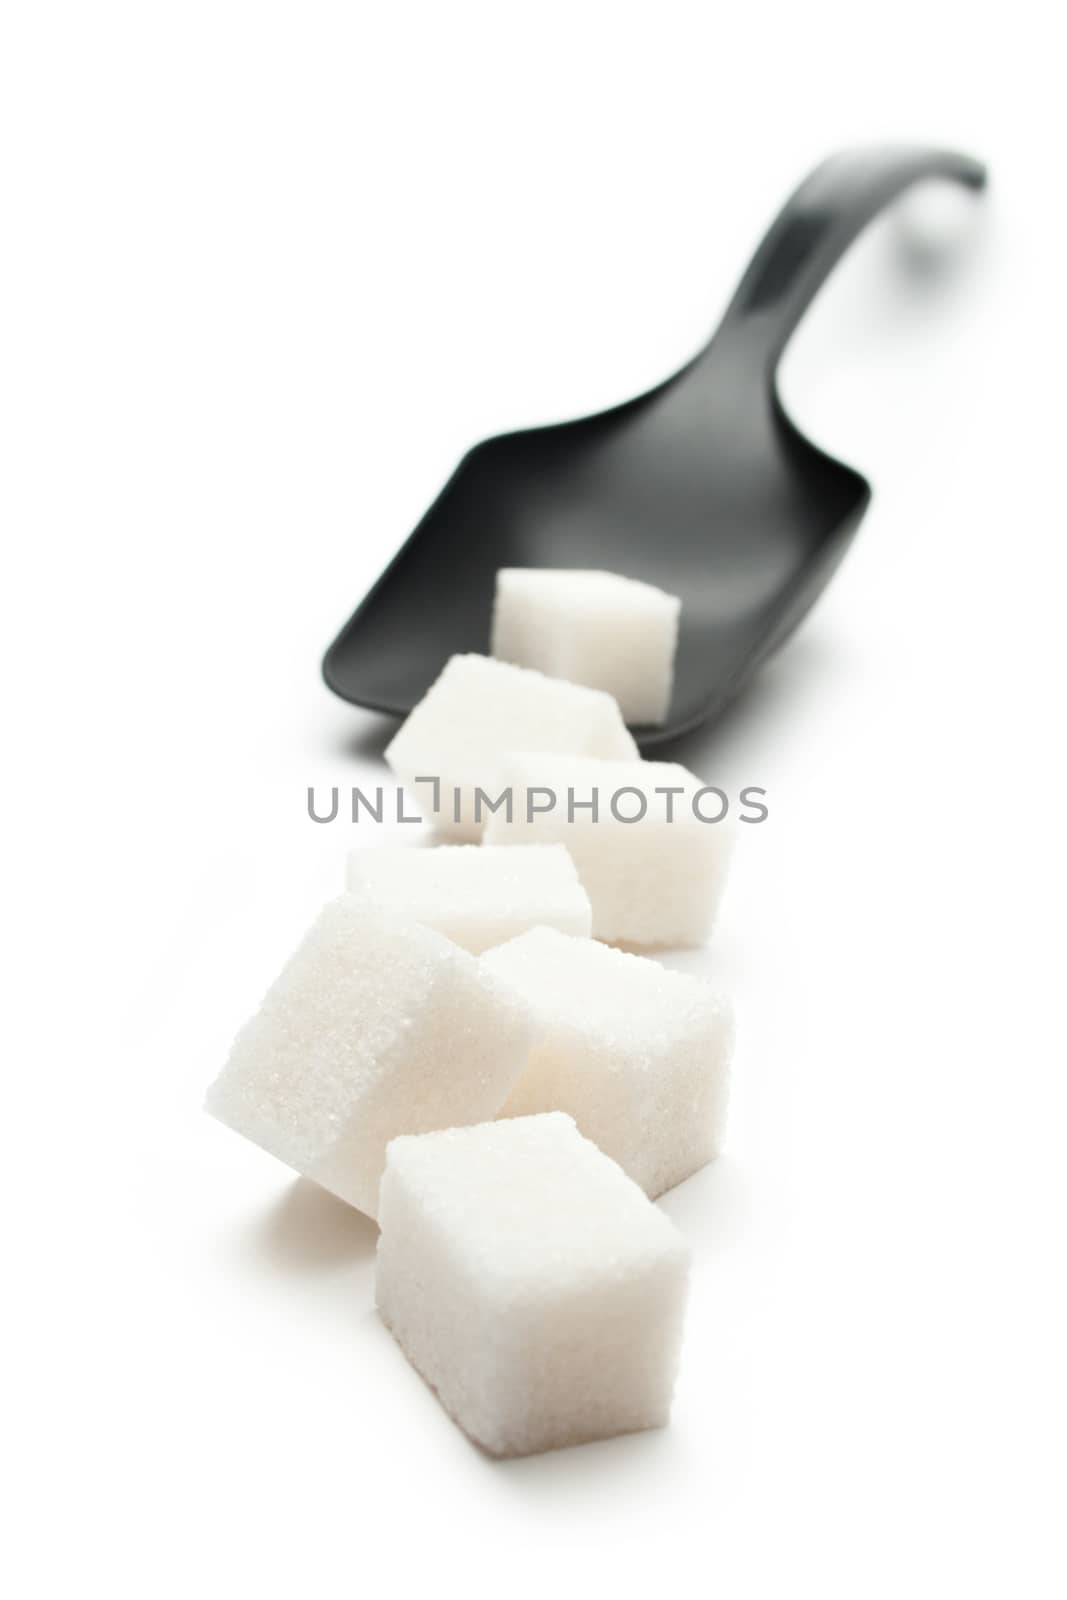 Cubes of sugar with plastic spoon by Garsya